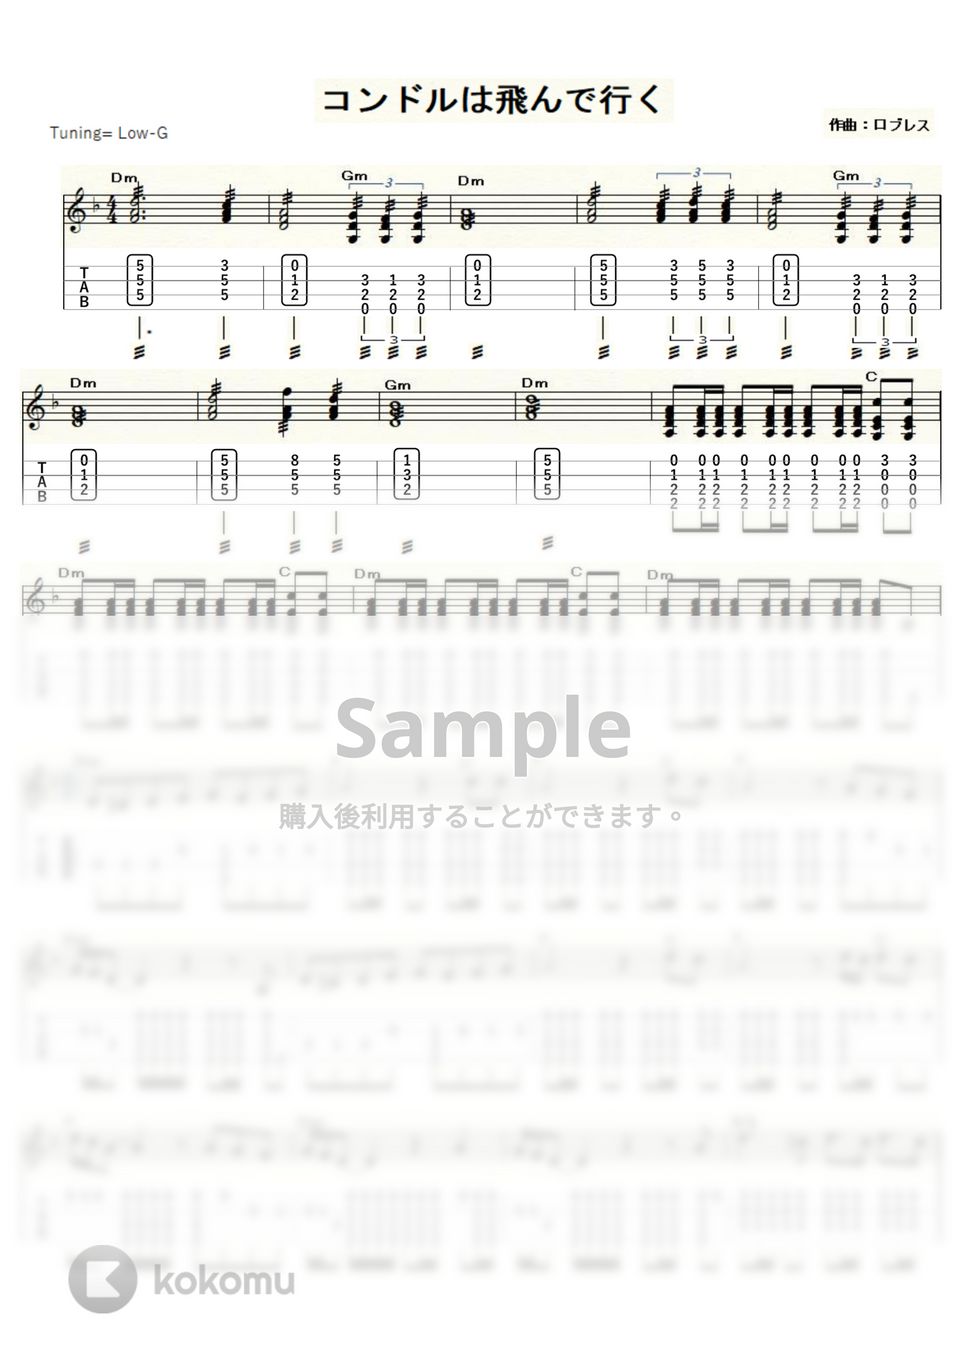 Robles Daniel Alomia - コンドルは飛んで行く (Low-G) by ukulelepapa